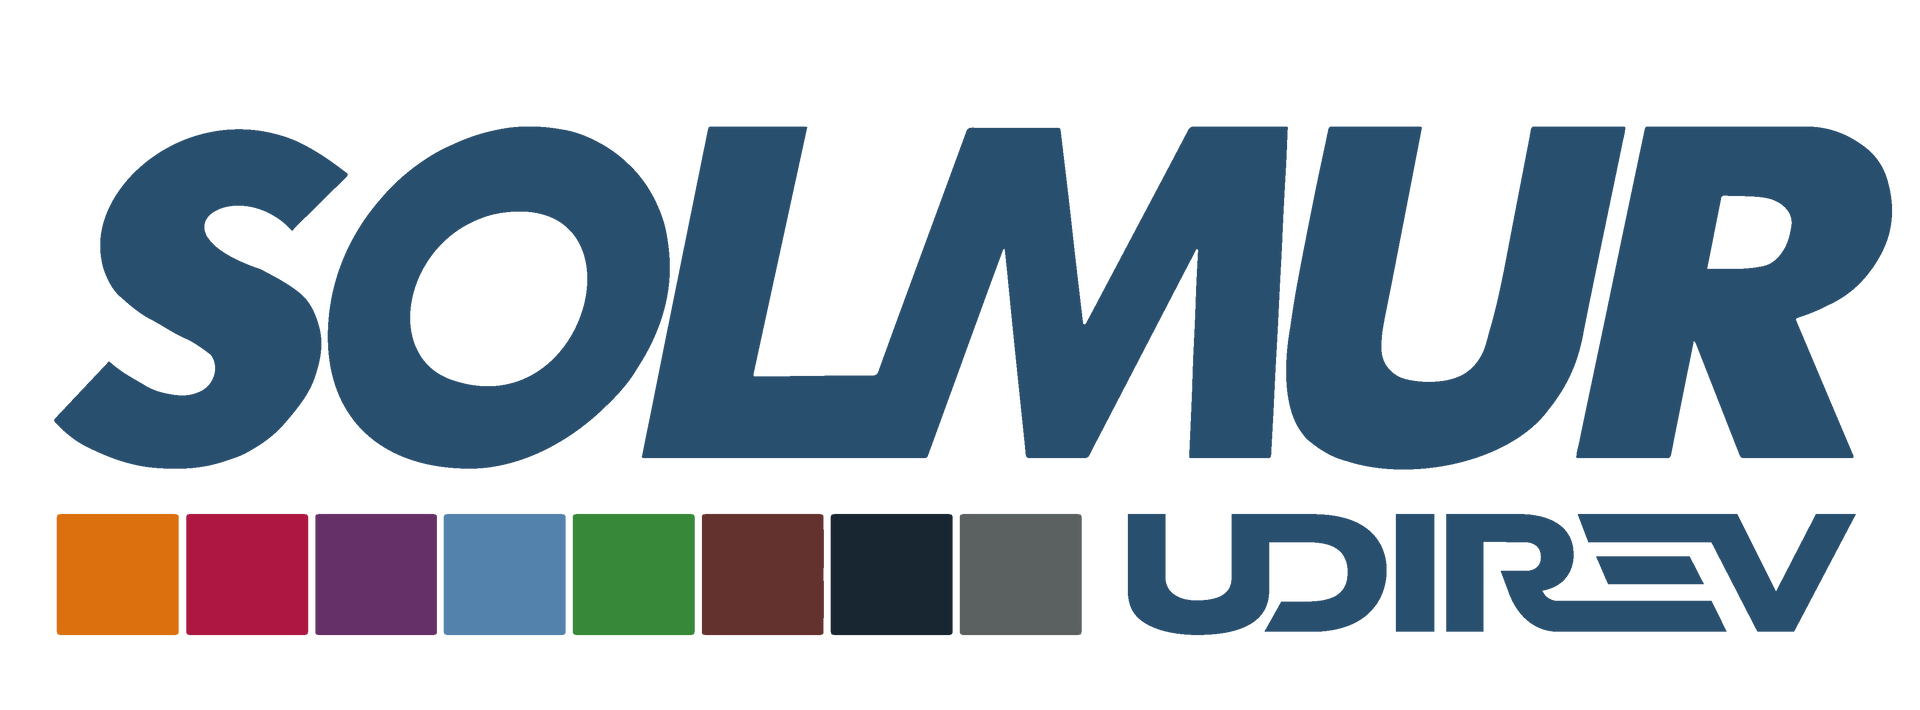 Logo Solmur